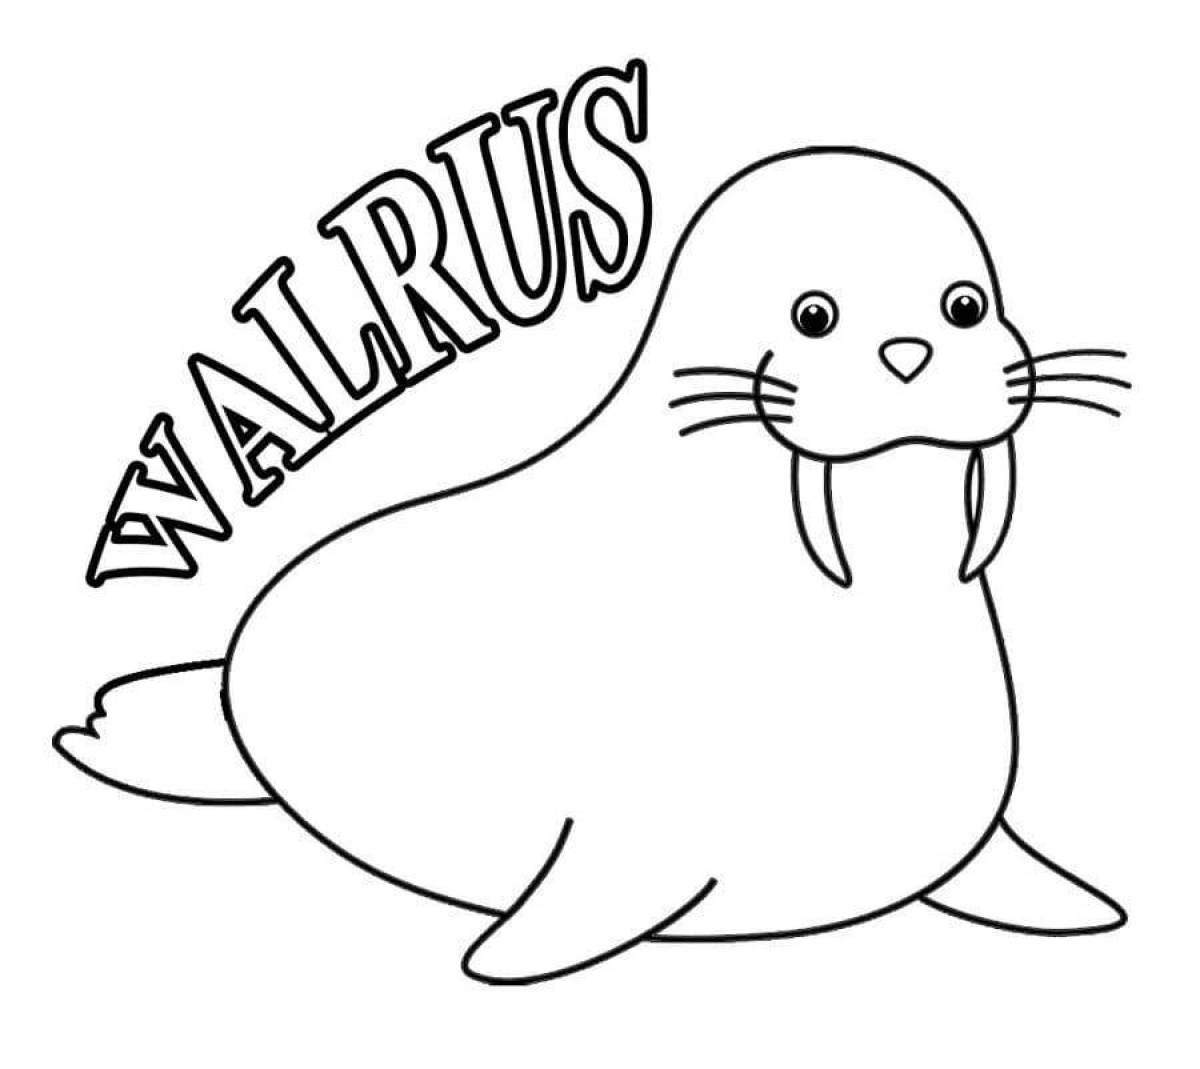 Fantastic walrus coloring book for kids